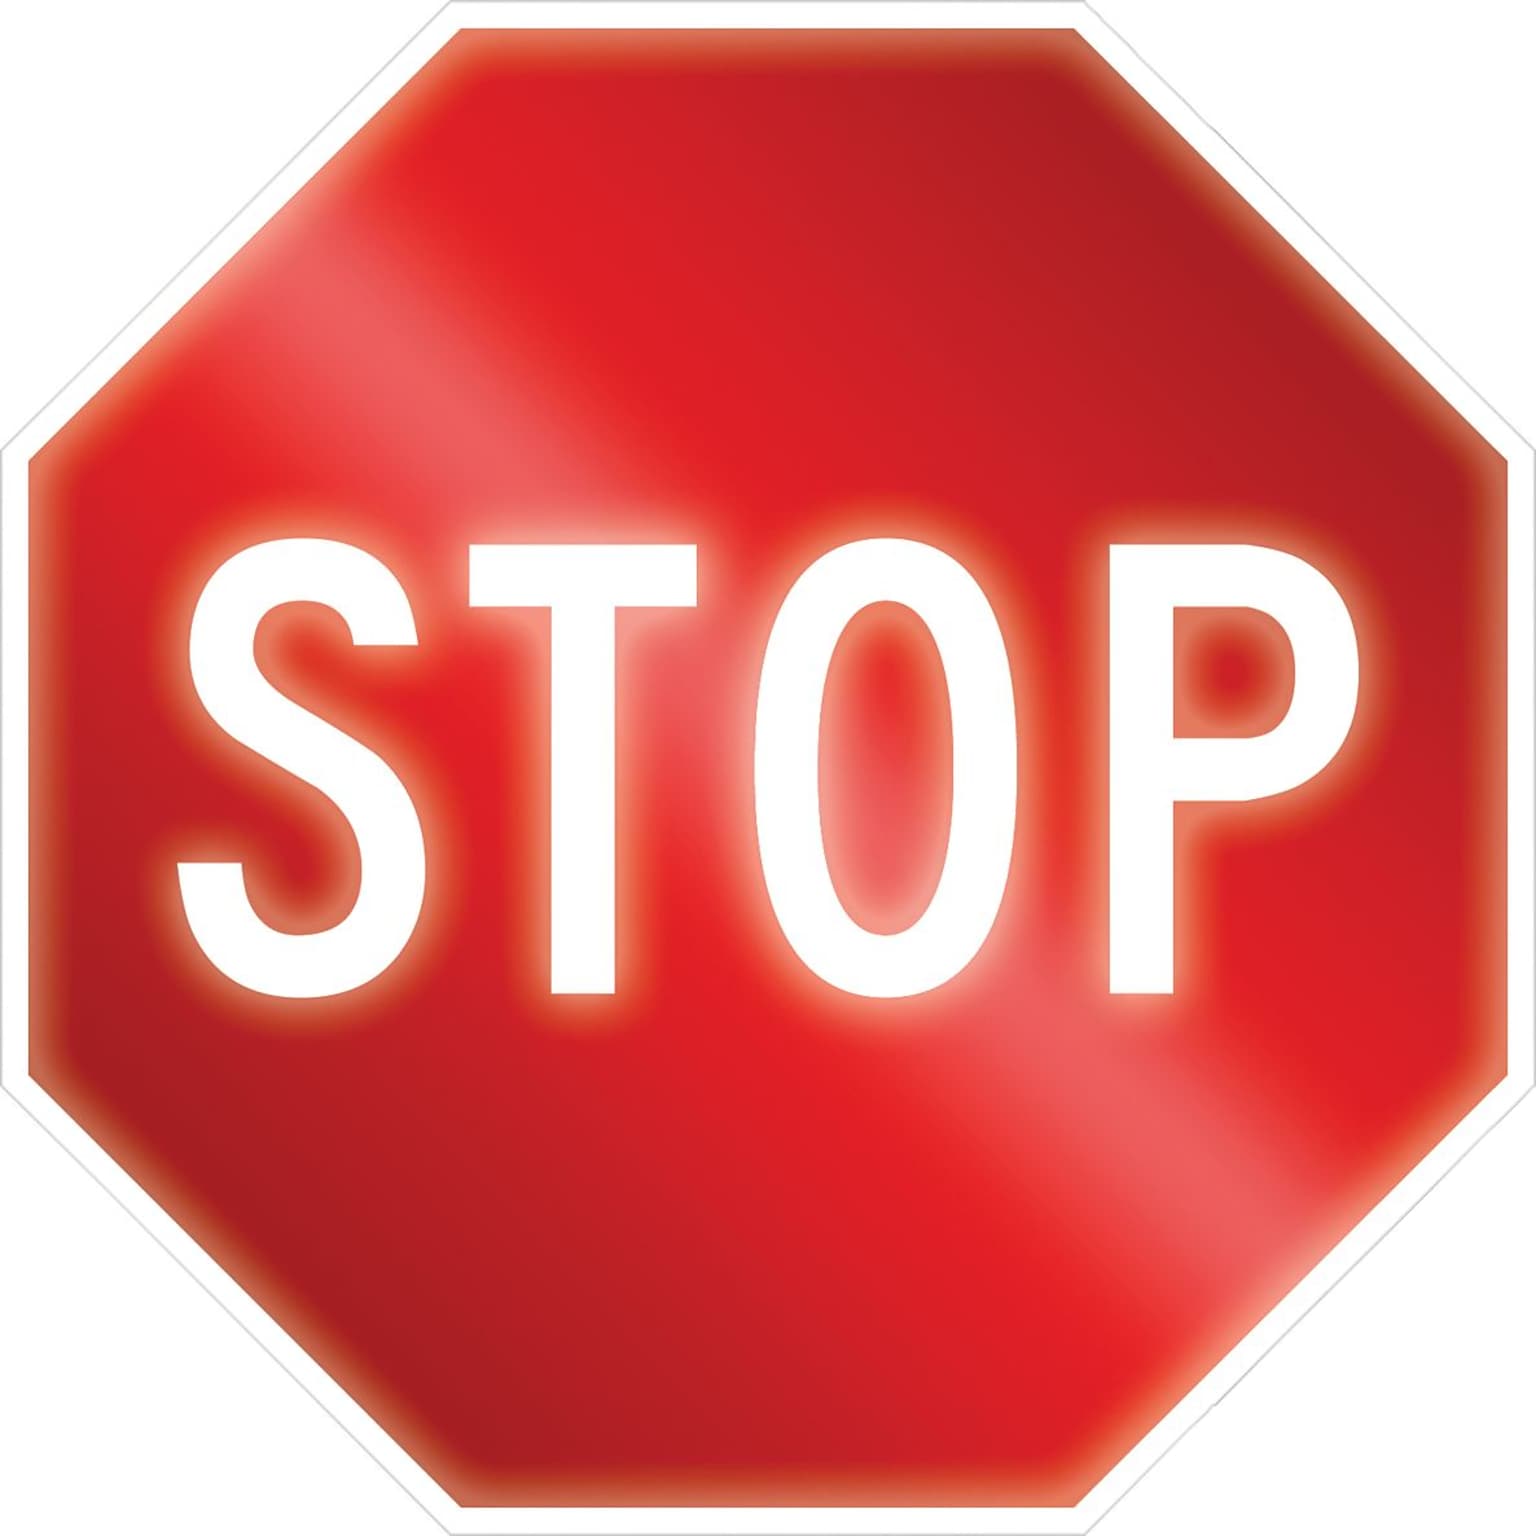 Accuform Prismatic Reflective STOP Regulatory Traffic Sign, 18 x 18, Aluminum (FRR012)